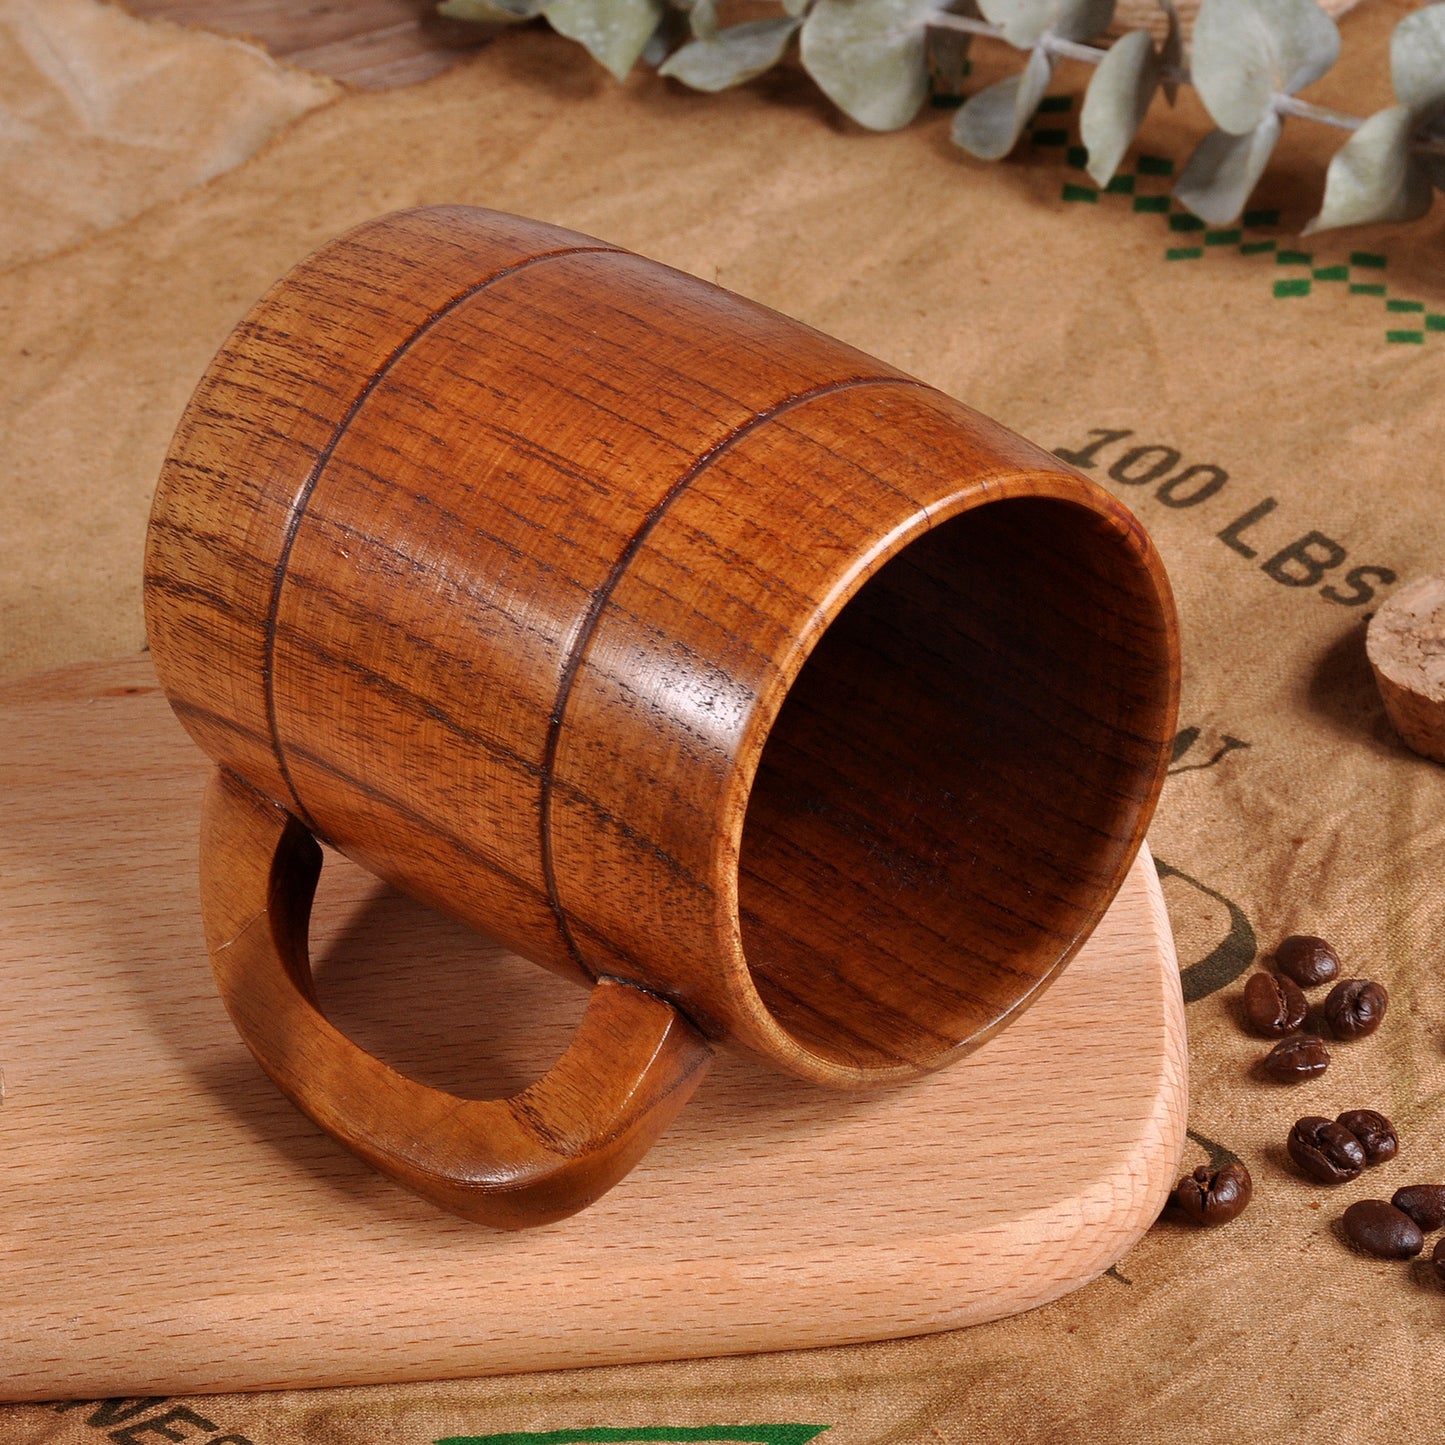 Beer wooden mug